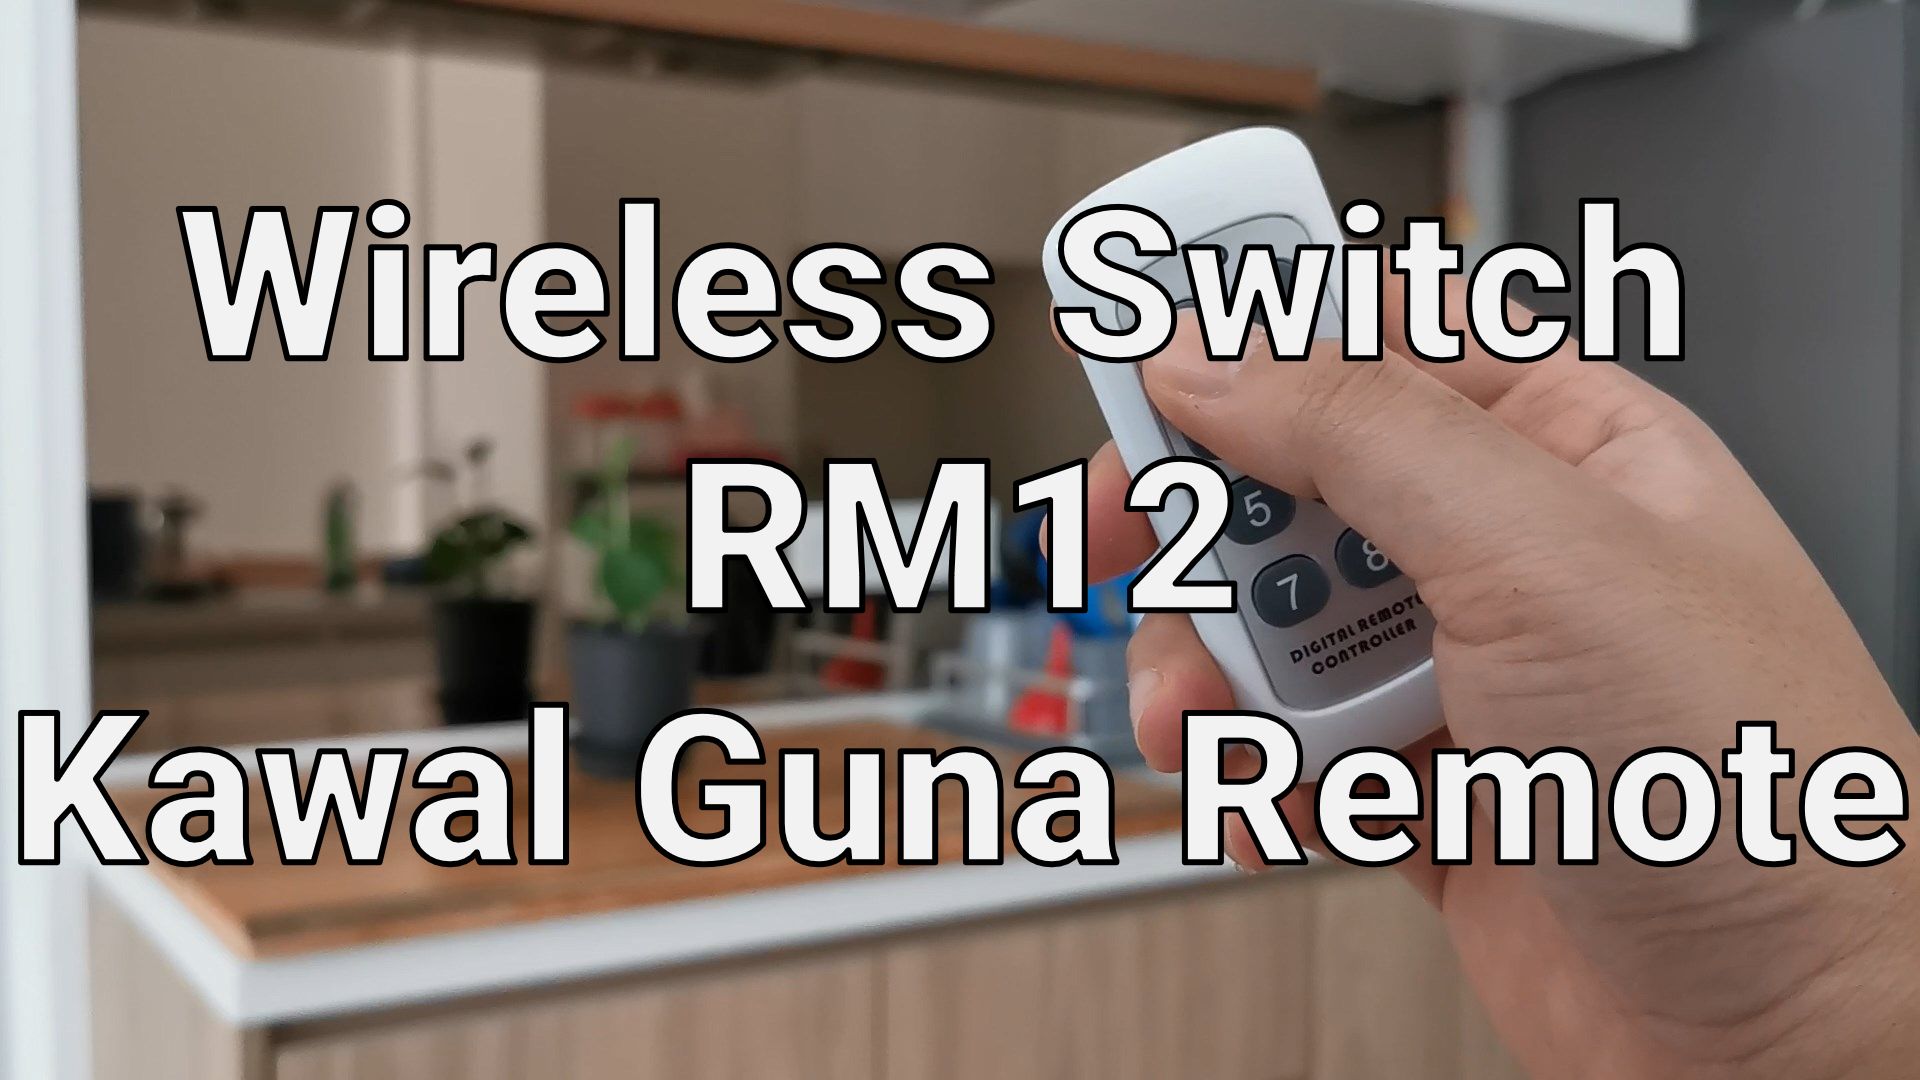 Wireless Switch, kawal guna remote RM12